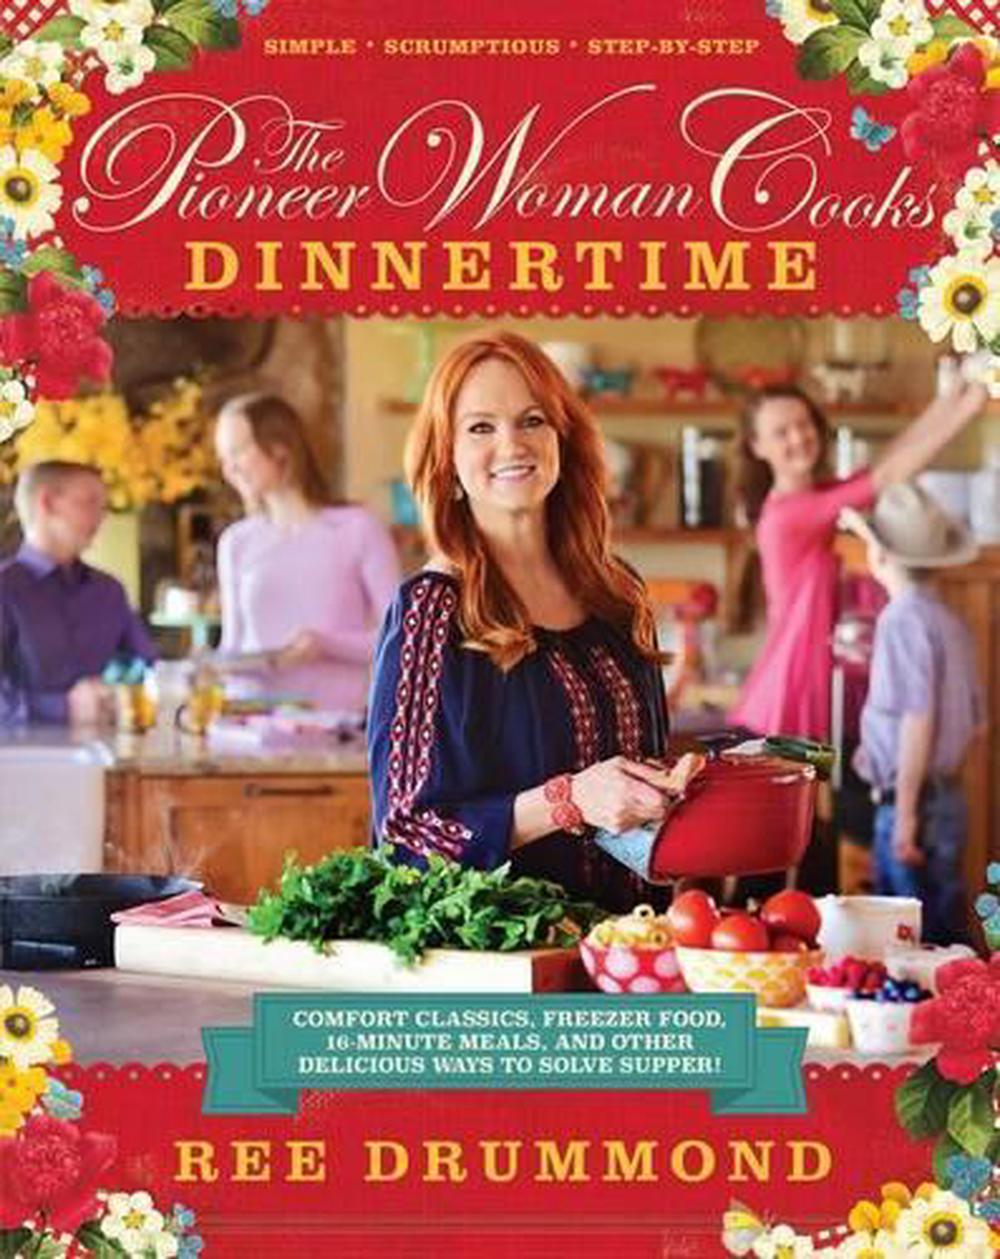 The Pioneer Woman Cooks: Dinnertime: Comfort Classics, Freezer Food, 16 ...